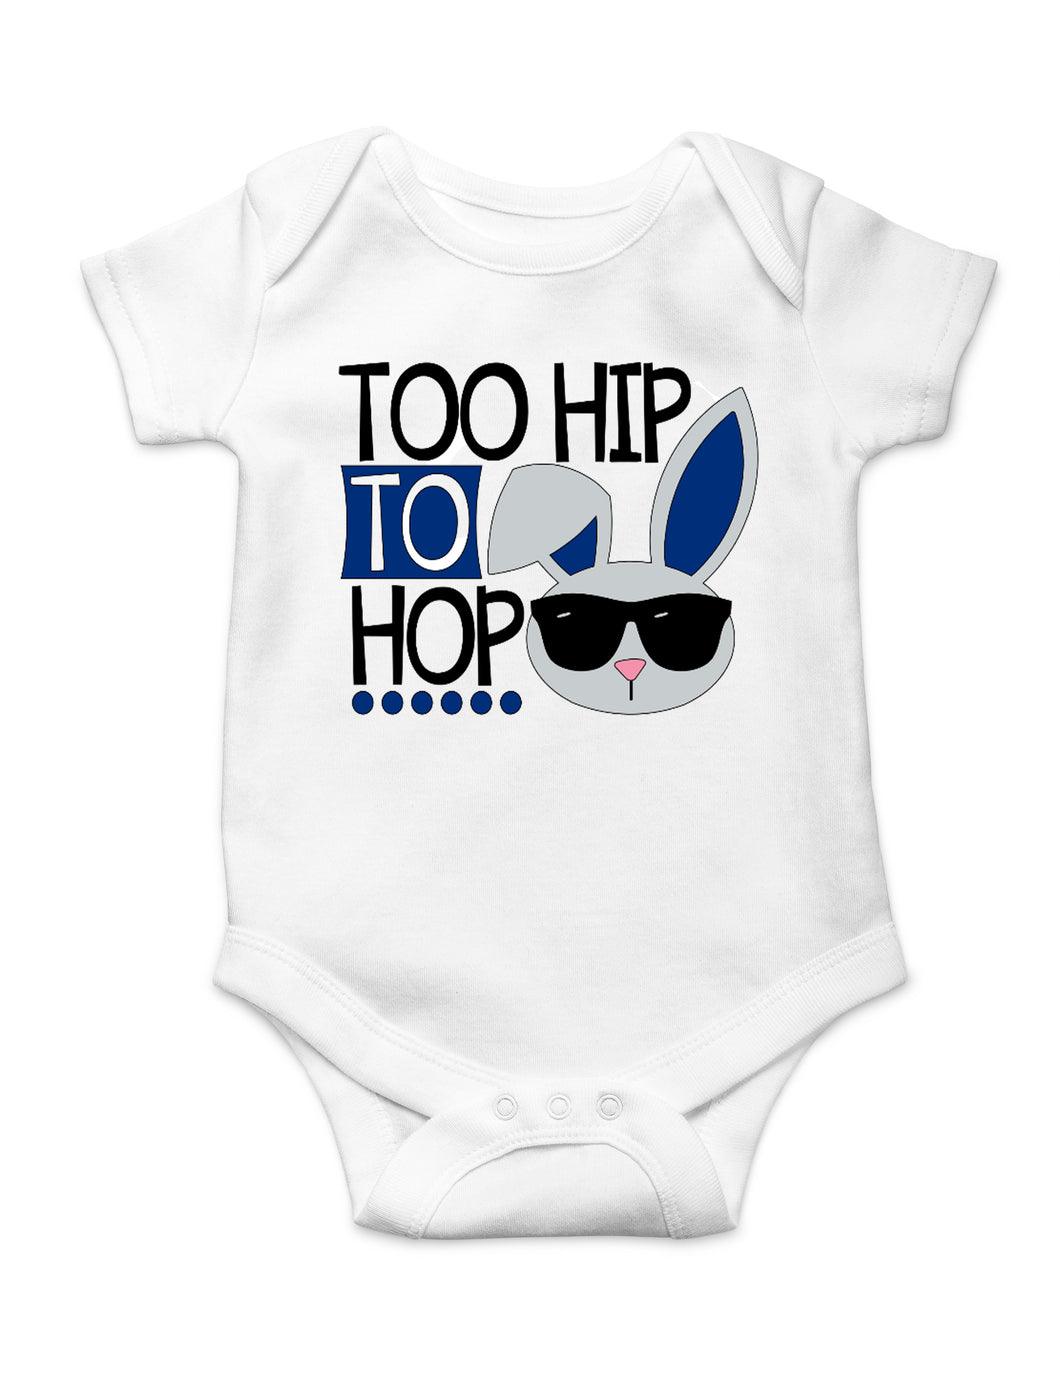 Too hip to hop T-Shirt